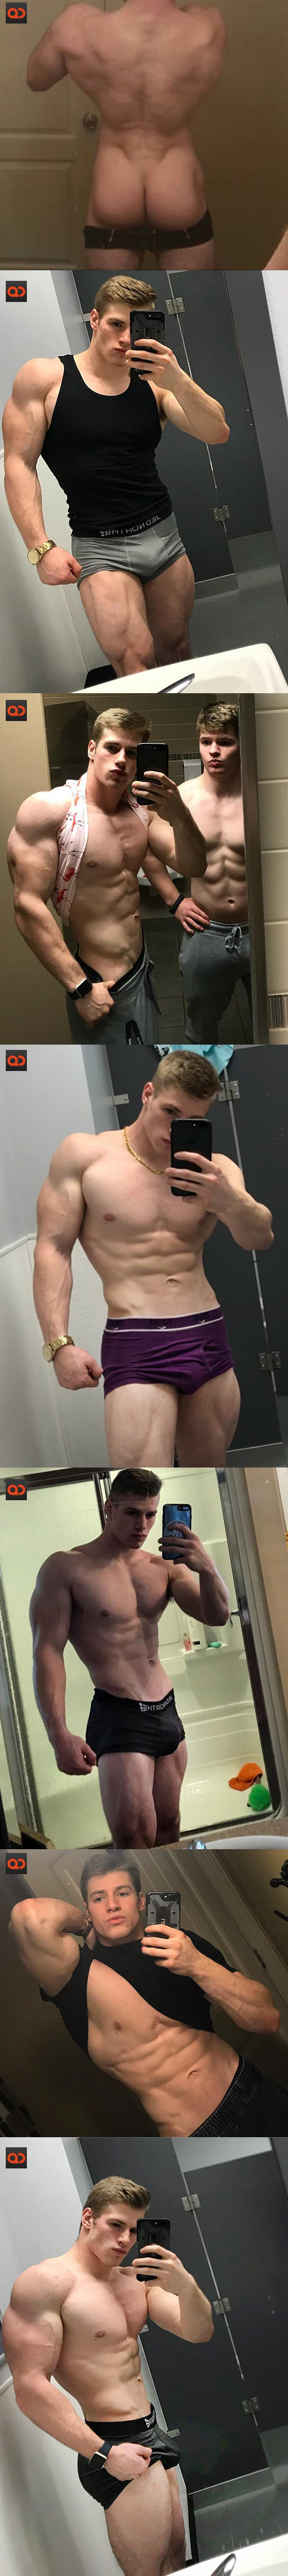 Patrick Leblanc, Hugely Popular Instagram Bodybuilder, Alleged Dick Pics Leak!